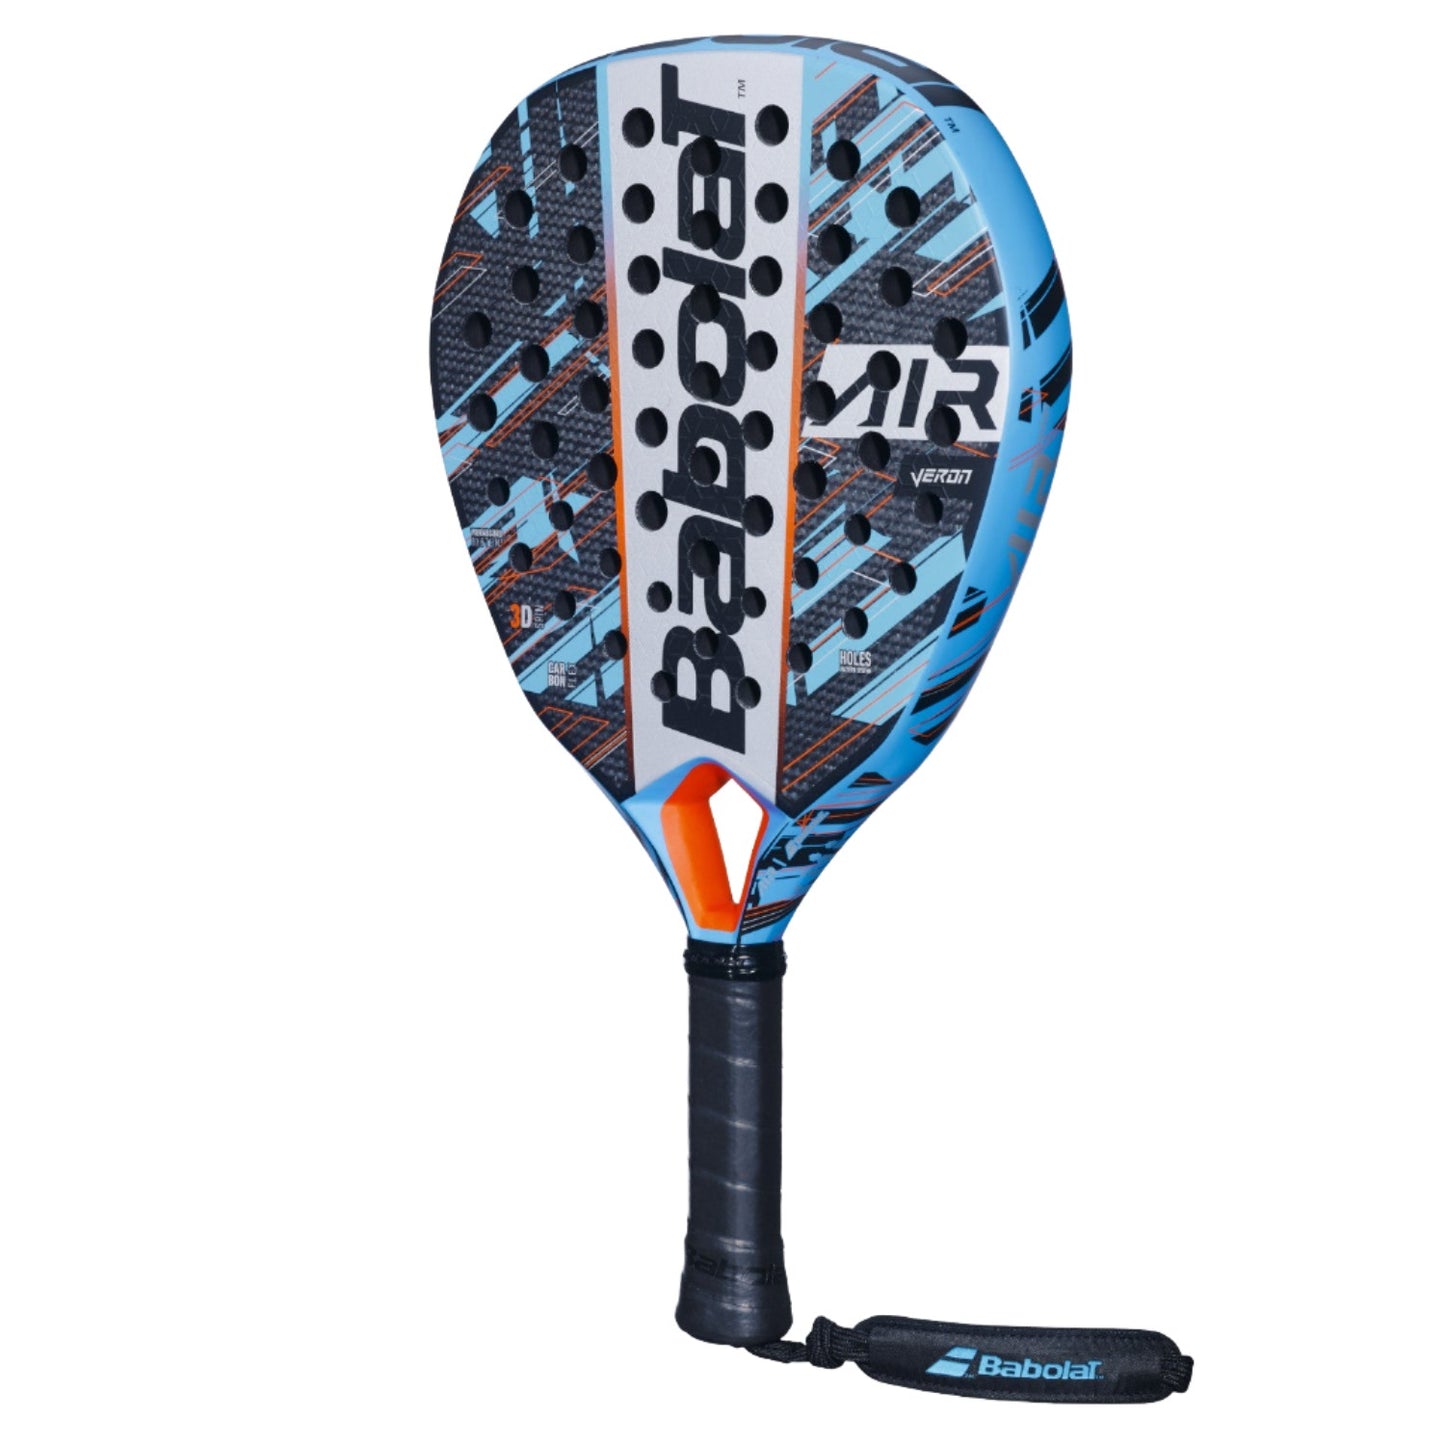 Main image of the Babolat Air Veron 2023 padel racket on sale at Thepadelshop.co.nz